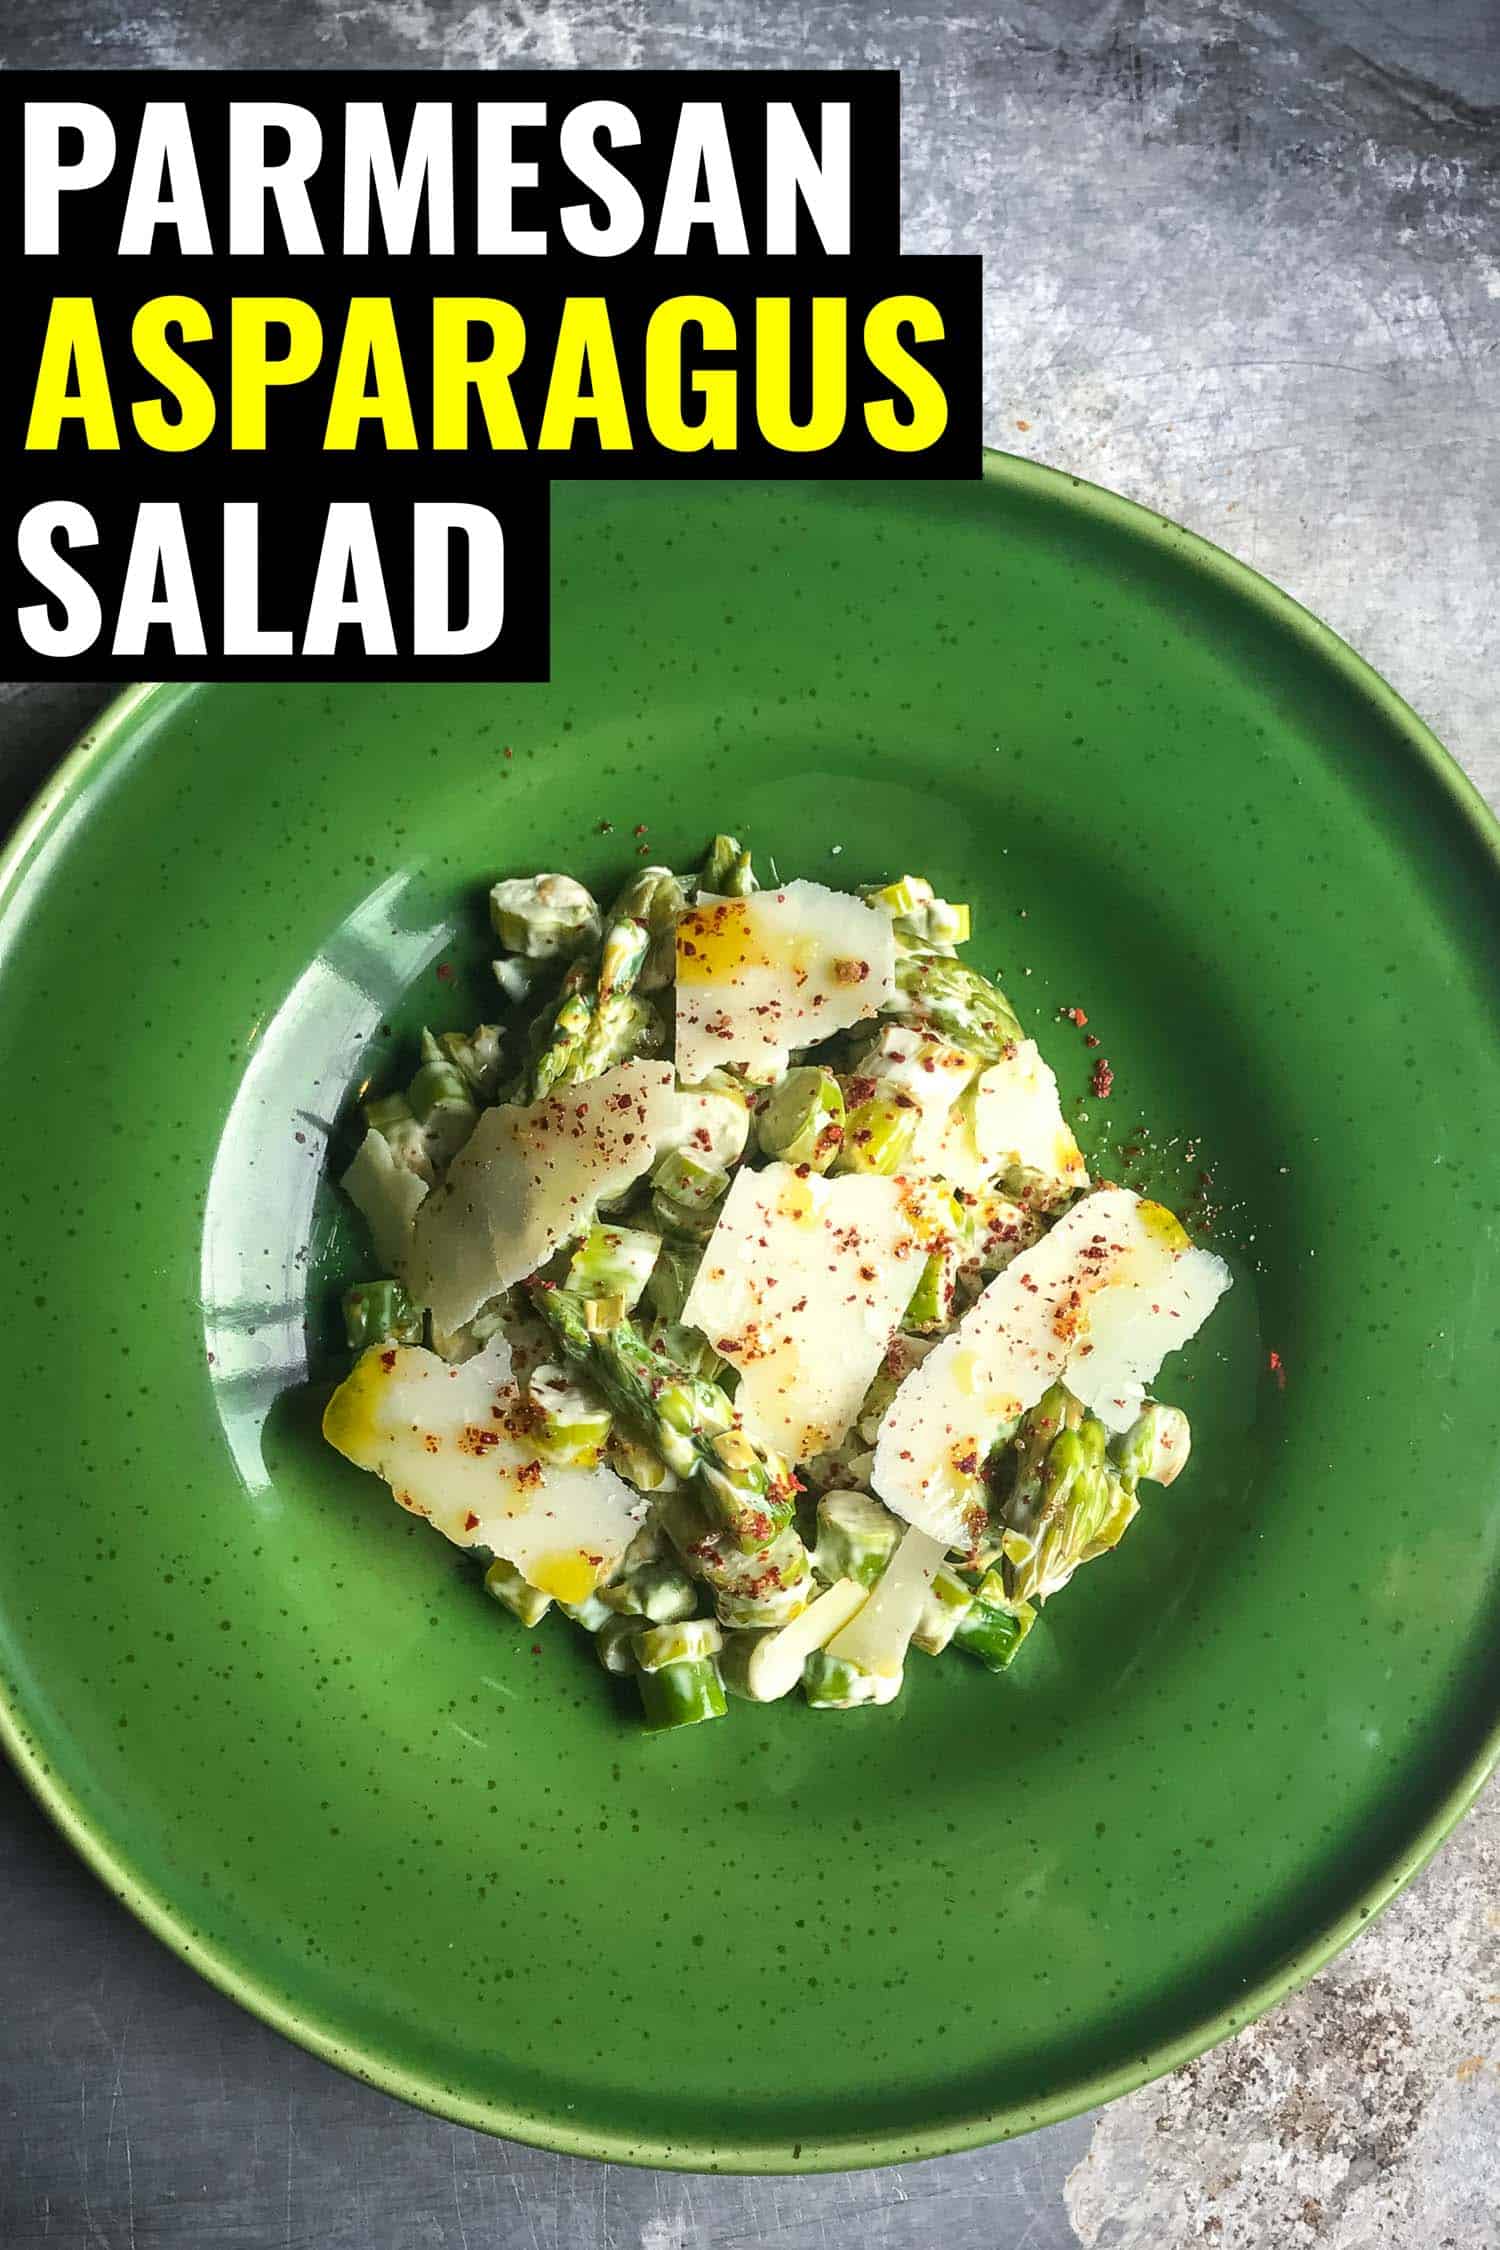 Parmesan asparagus salad on a green plate